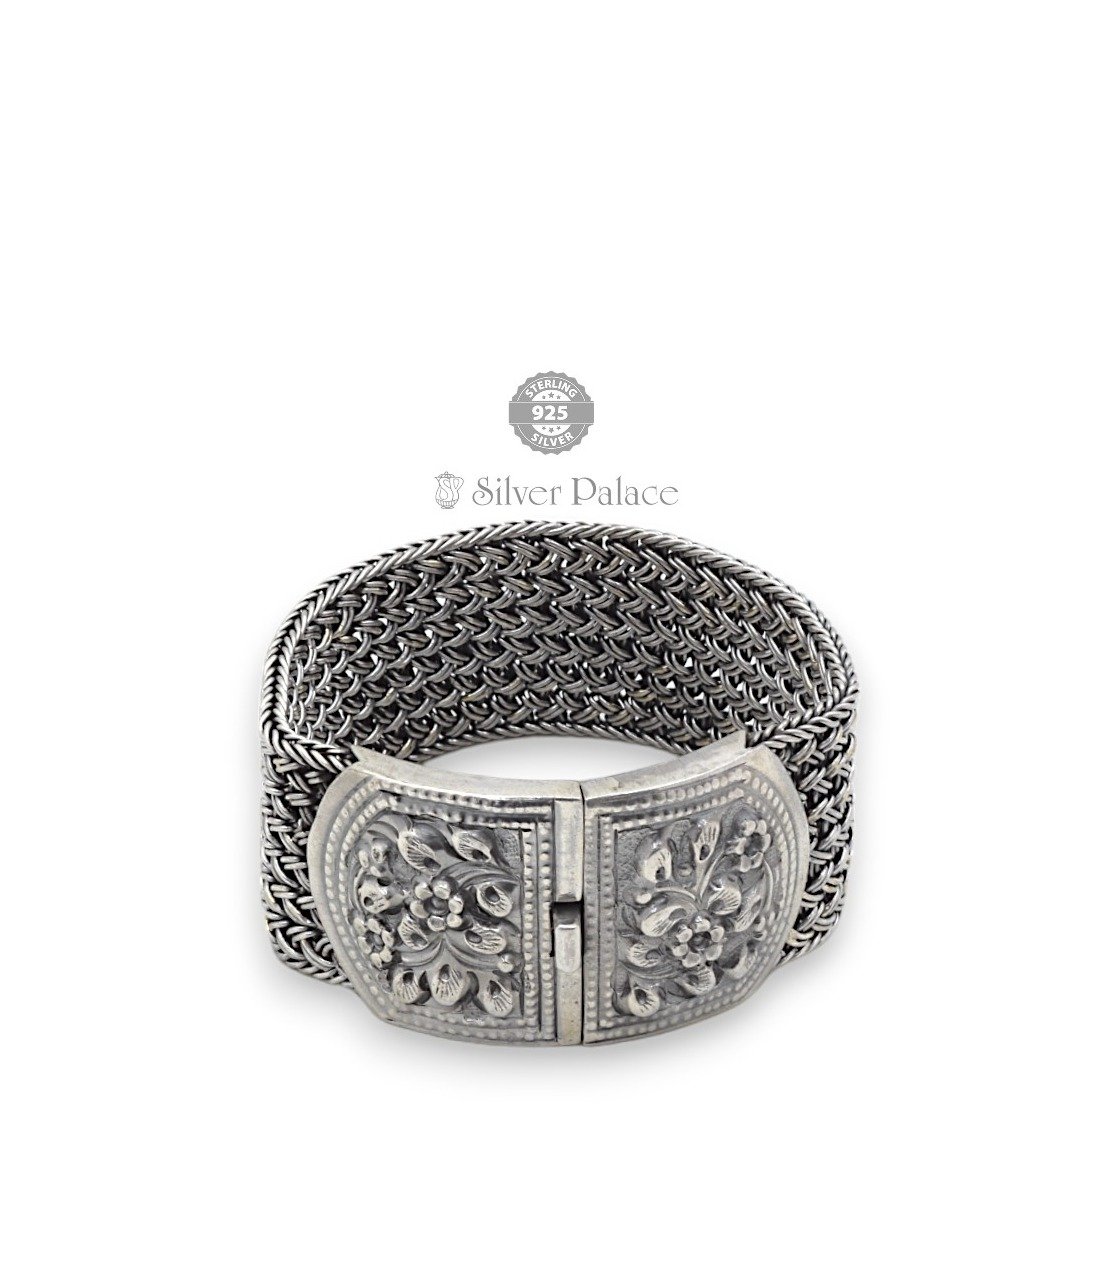 92.5 Sterling Silver Triple Bracelet Cuff Bangle Kada - Silver Palace